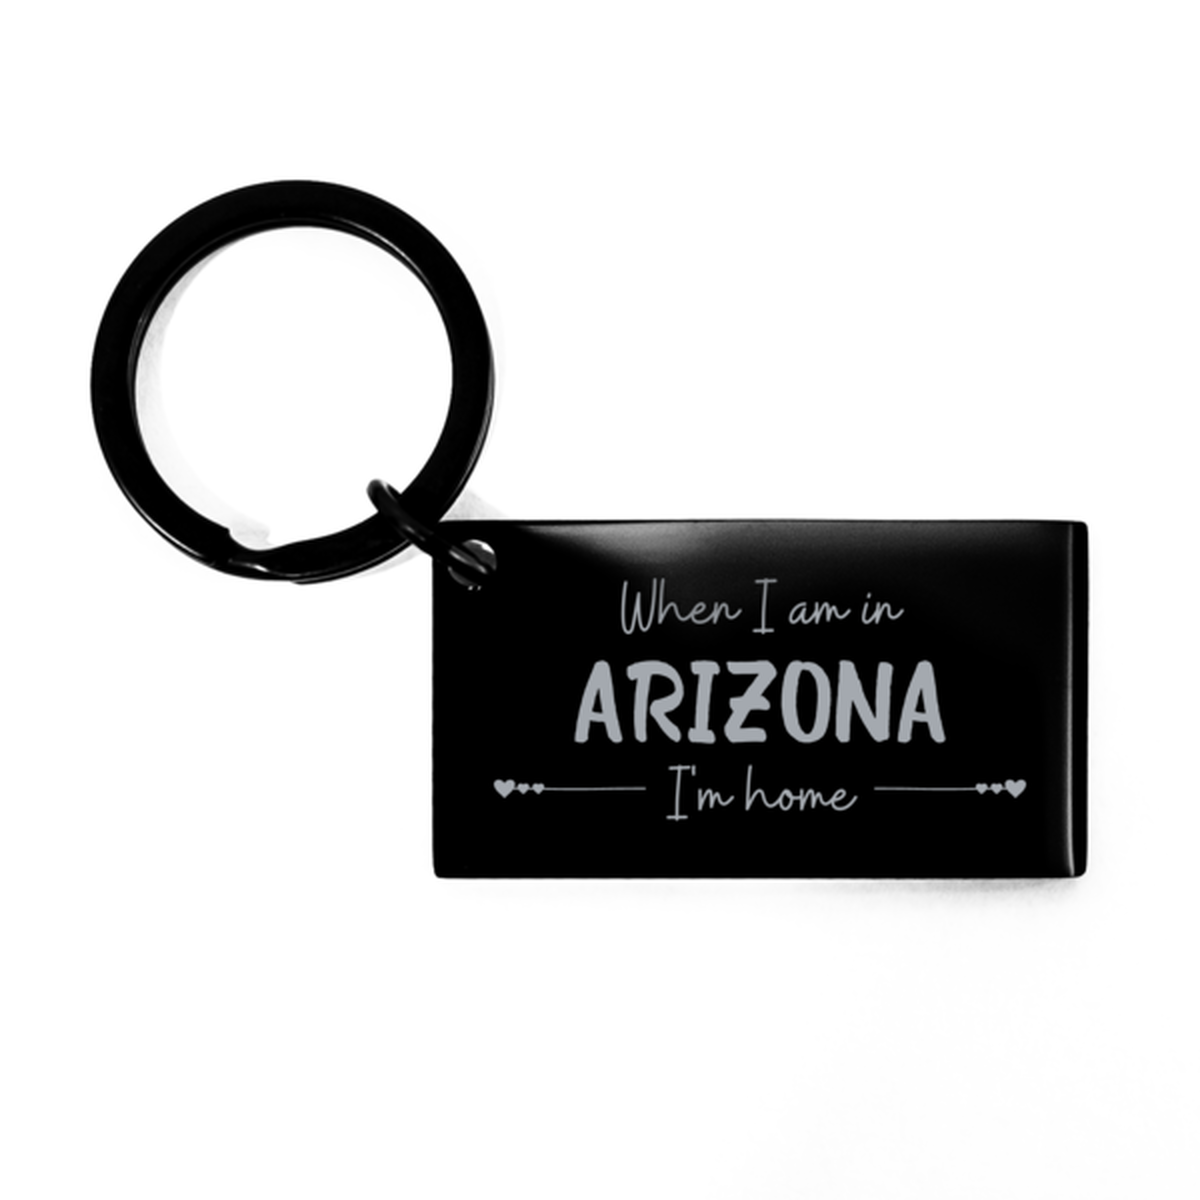 When I am in Arizona I'm home Keychain, Cheap Gifts For Arizona, State Arizona Birthday Gifts for Friends Coworker